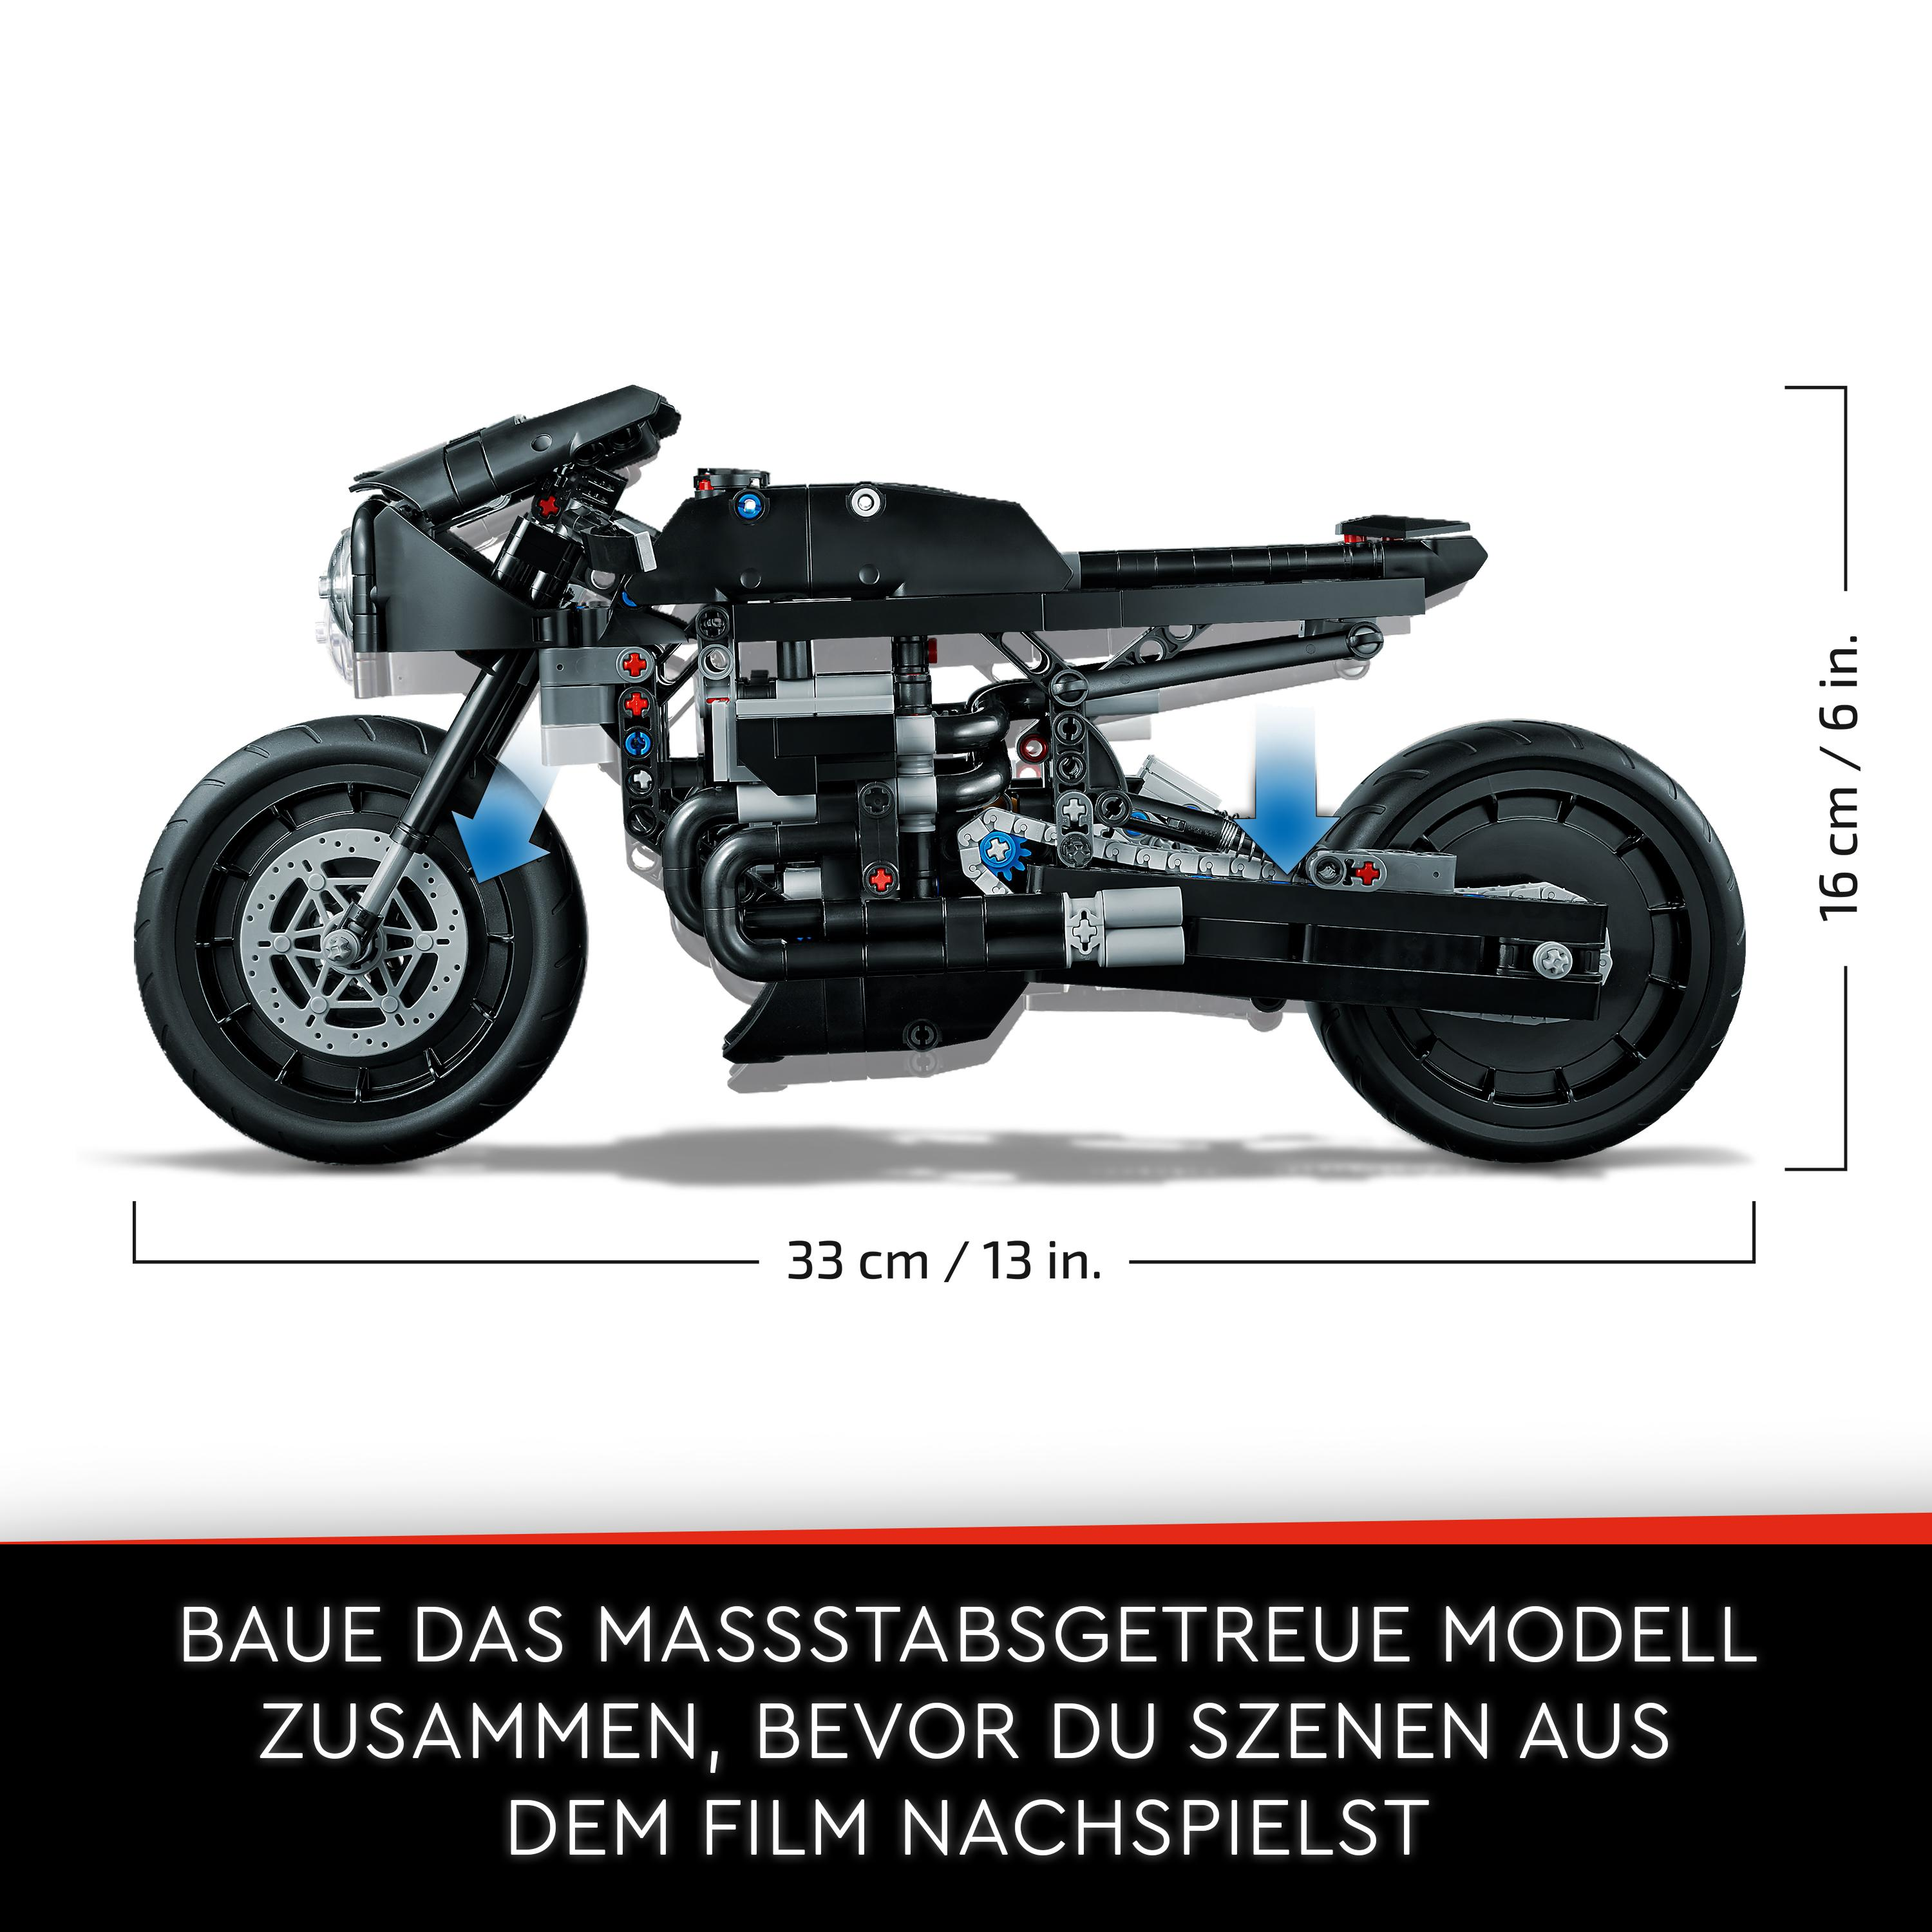 LEGO Technic 42155 THE BATMAN Bausatz, BATCYCLE – Mehrfarbig